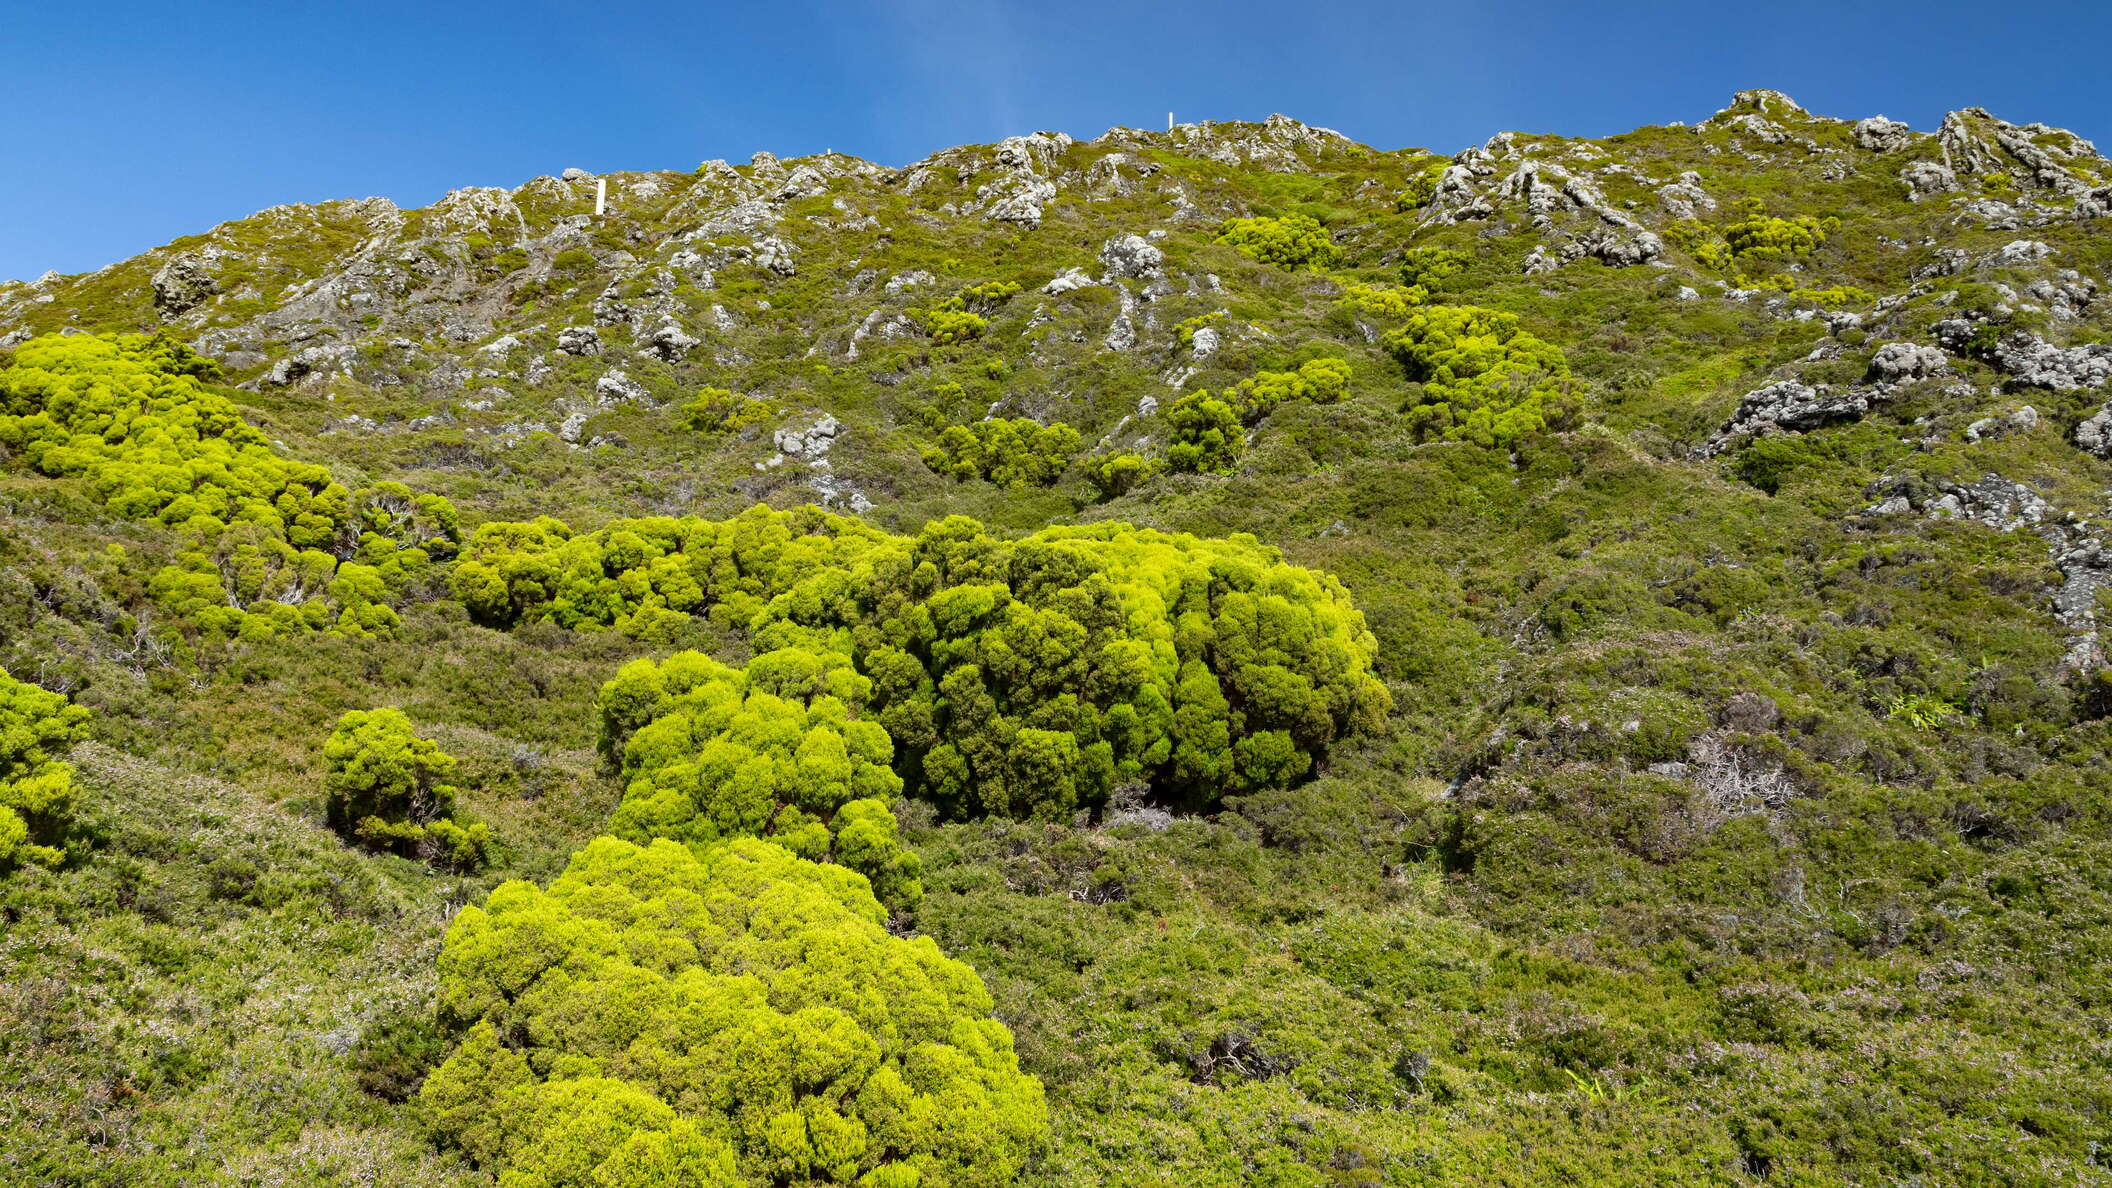 Montanha do Pico | Western slope with Erica azorica